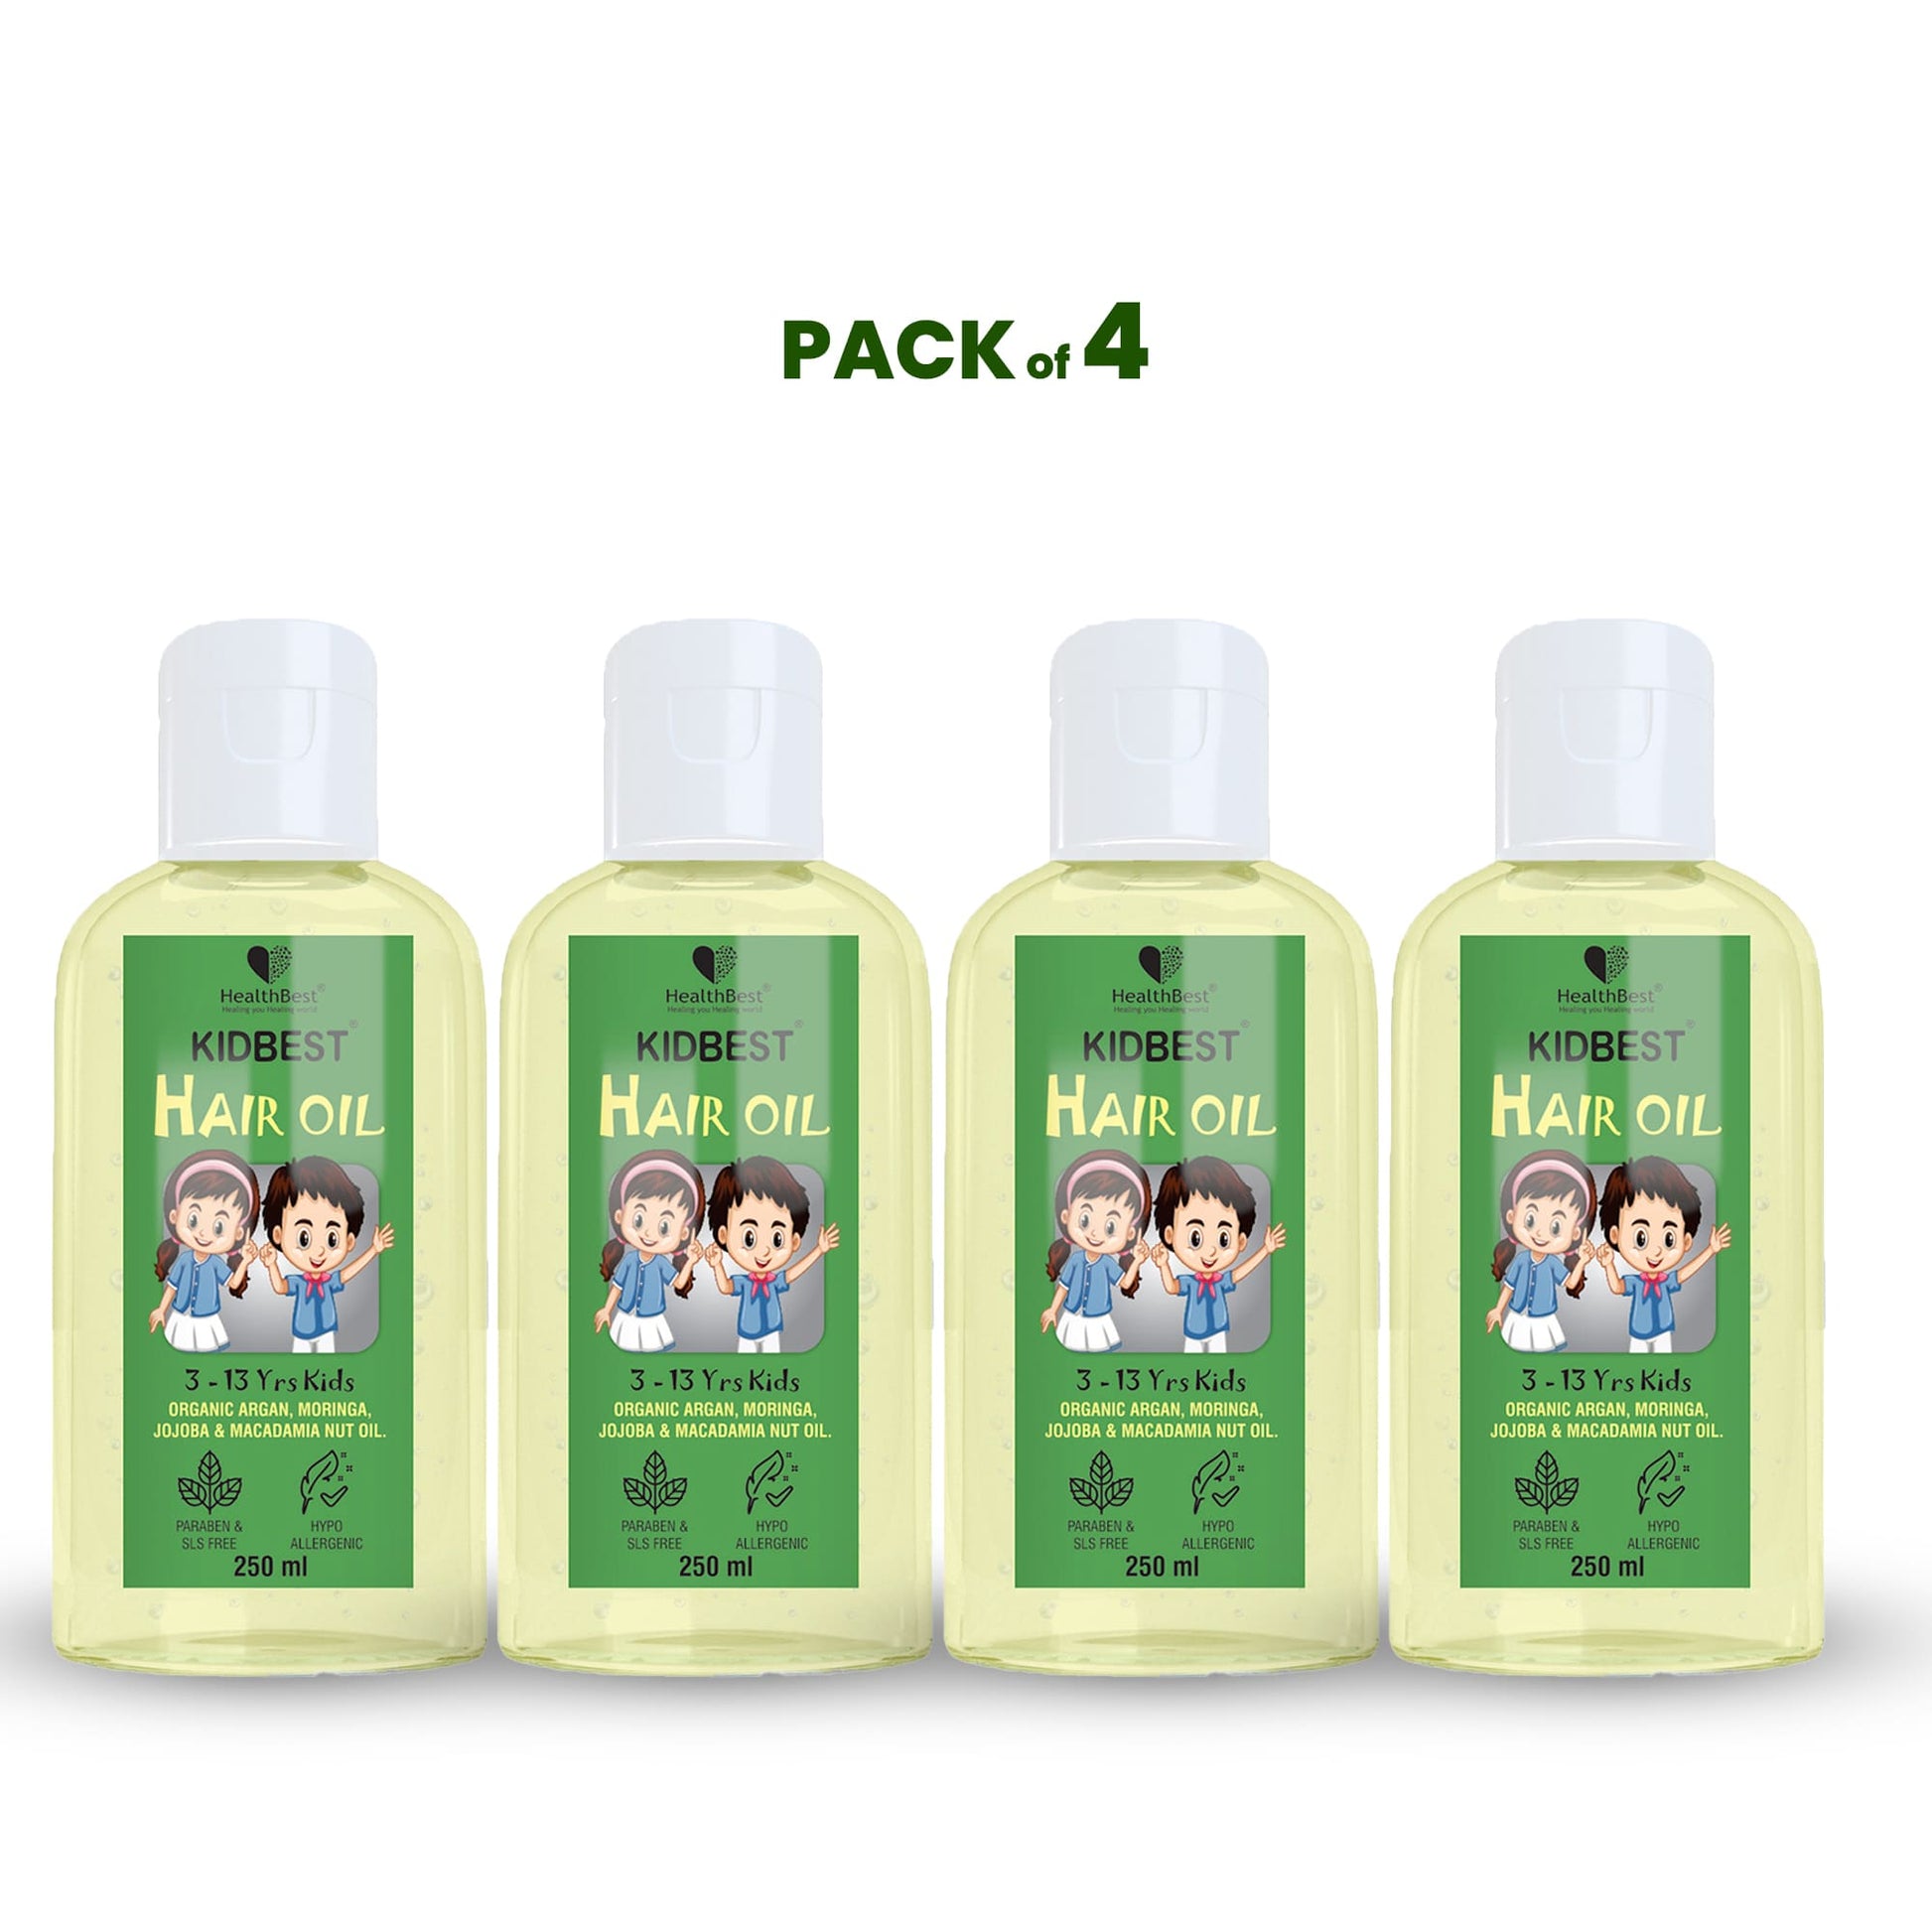 HealthBest Kidbest Hair Oil for Kids Pack of 4